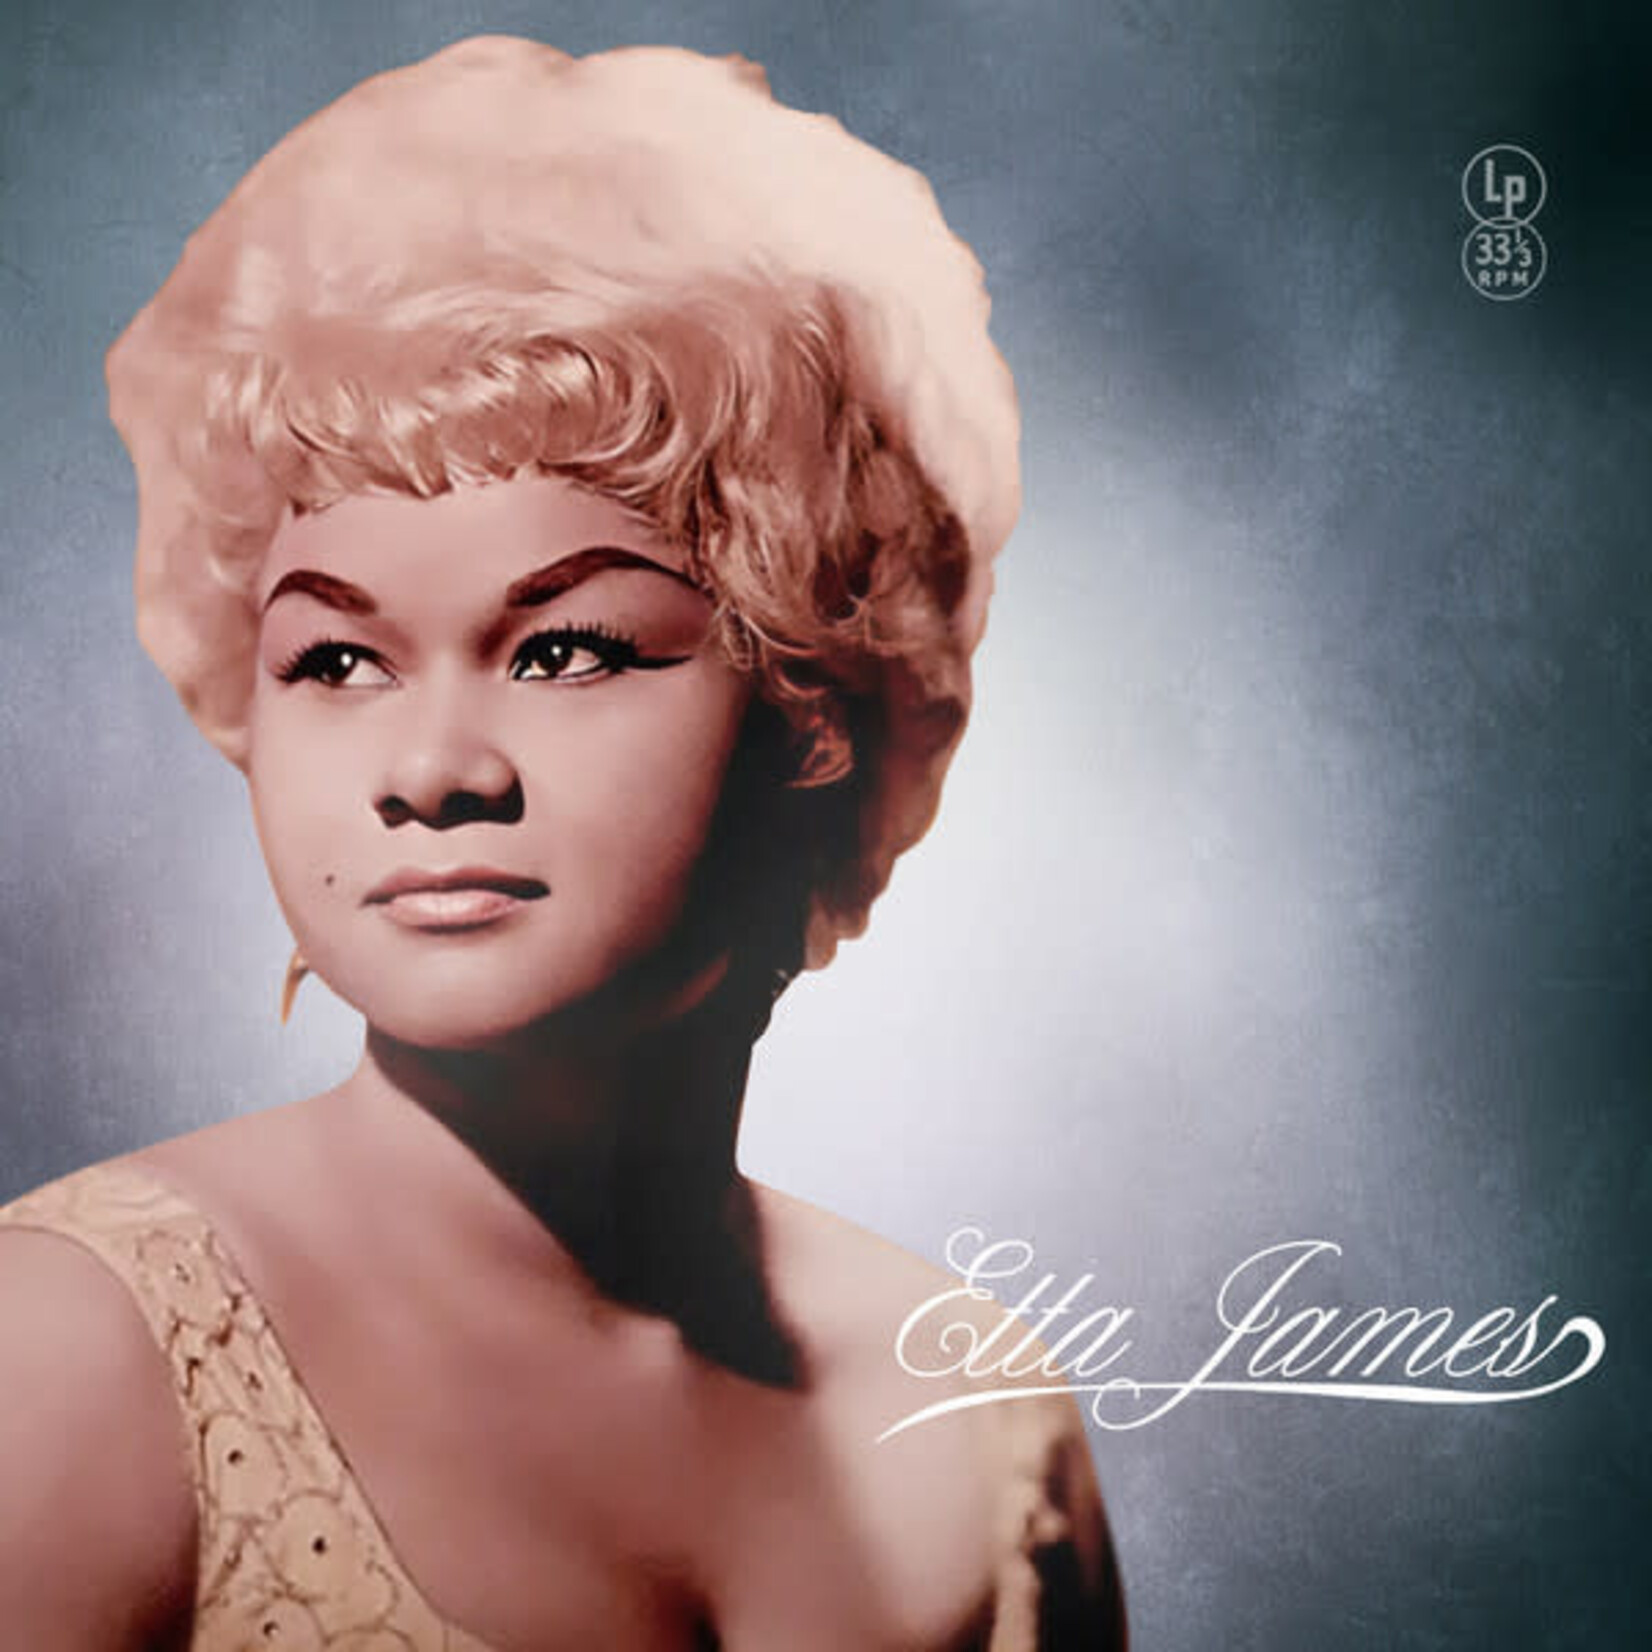 [New] Etta James - Etta James (clear vinyl)